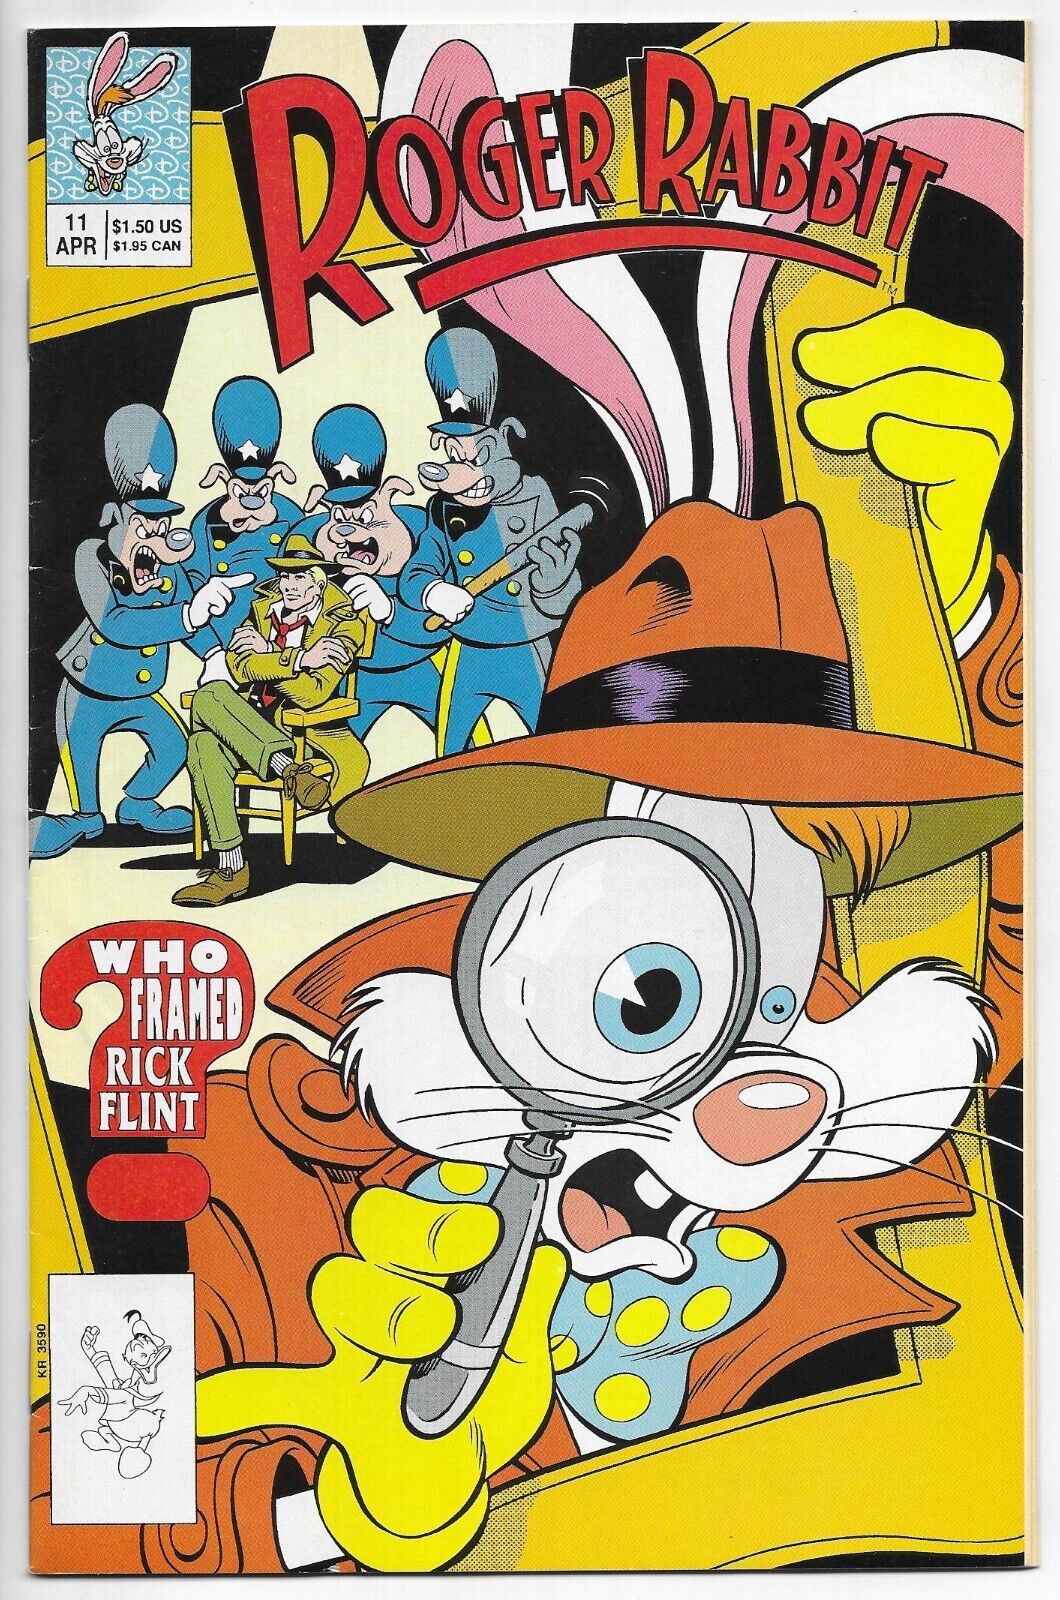 Roger Rabbit 9 & 11 DISNEY COMIC BOOK LOT 1st series Movie TV Cartoon CIRCA 1991